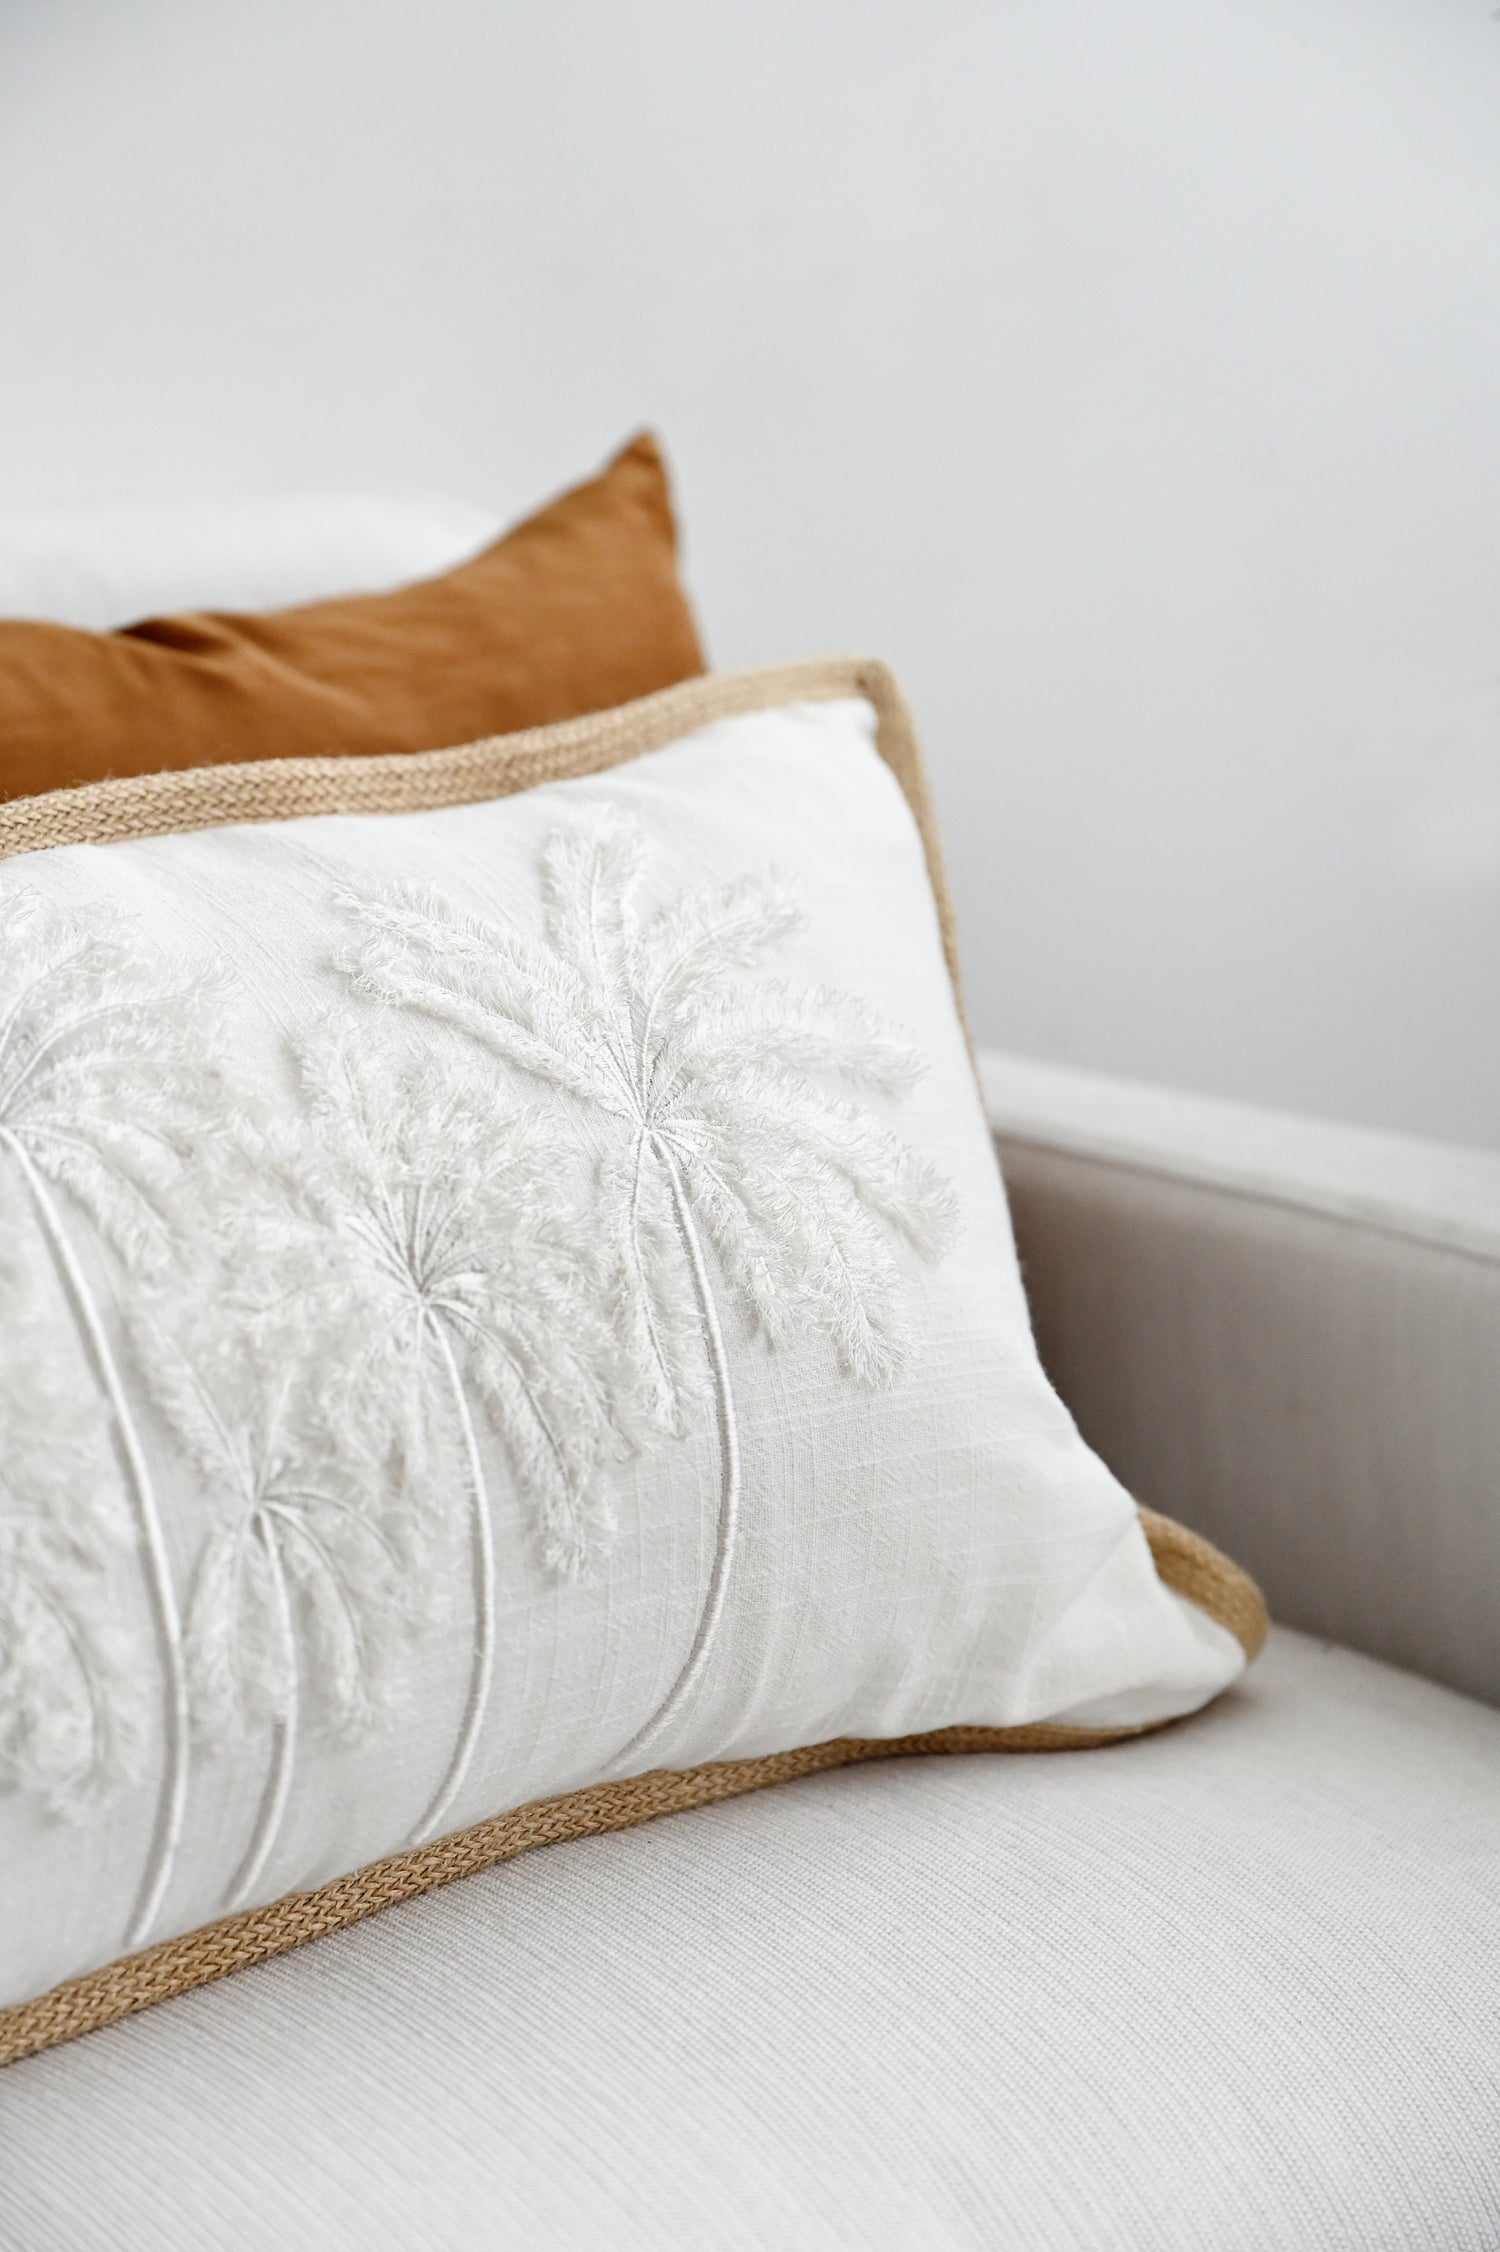 White Palm Tree Cushion - 60x35cm